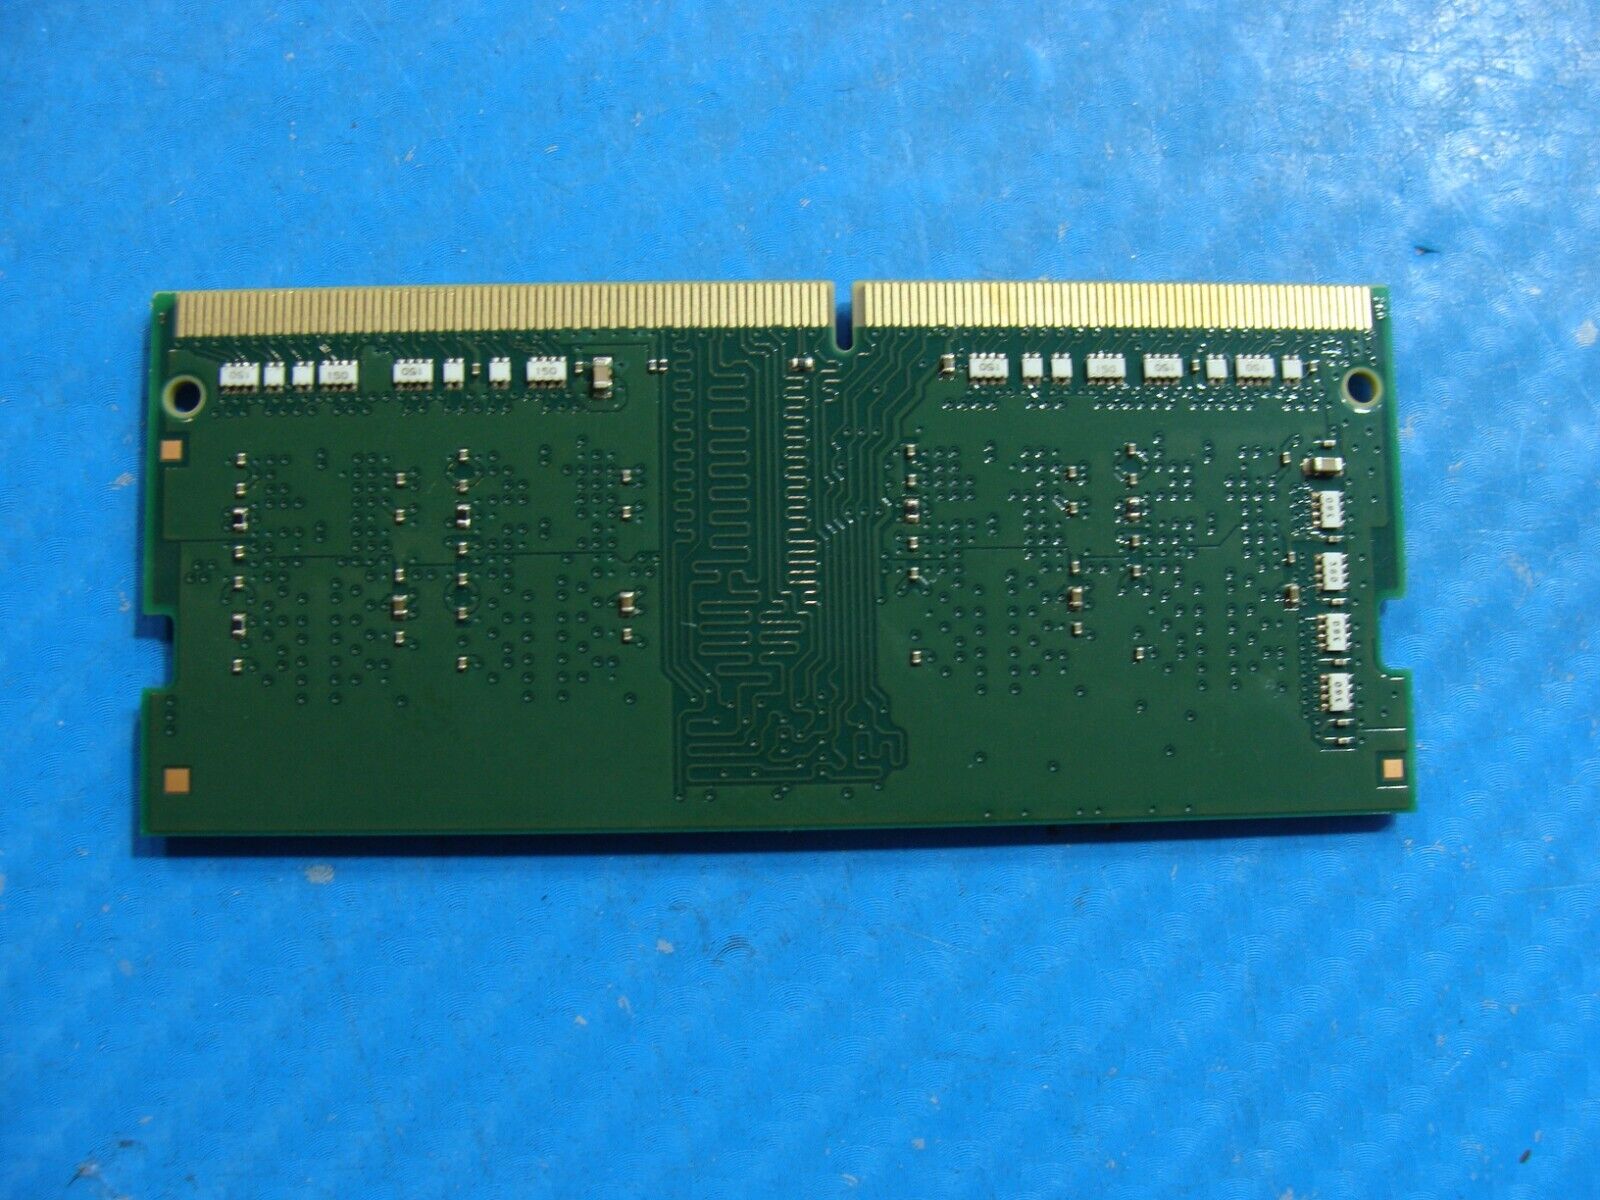 HP 15-dw3025cl Kingston 4GB 1Rx16 PC4-3200AA SO-DIMM Memory RAM HP32D4S2S1ME-4